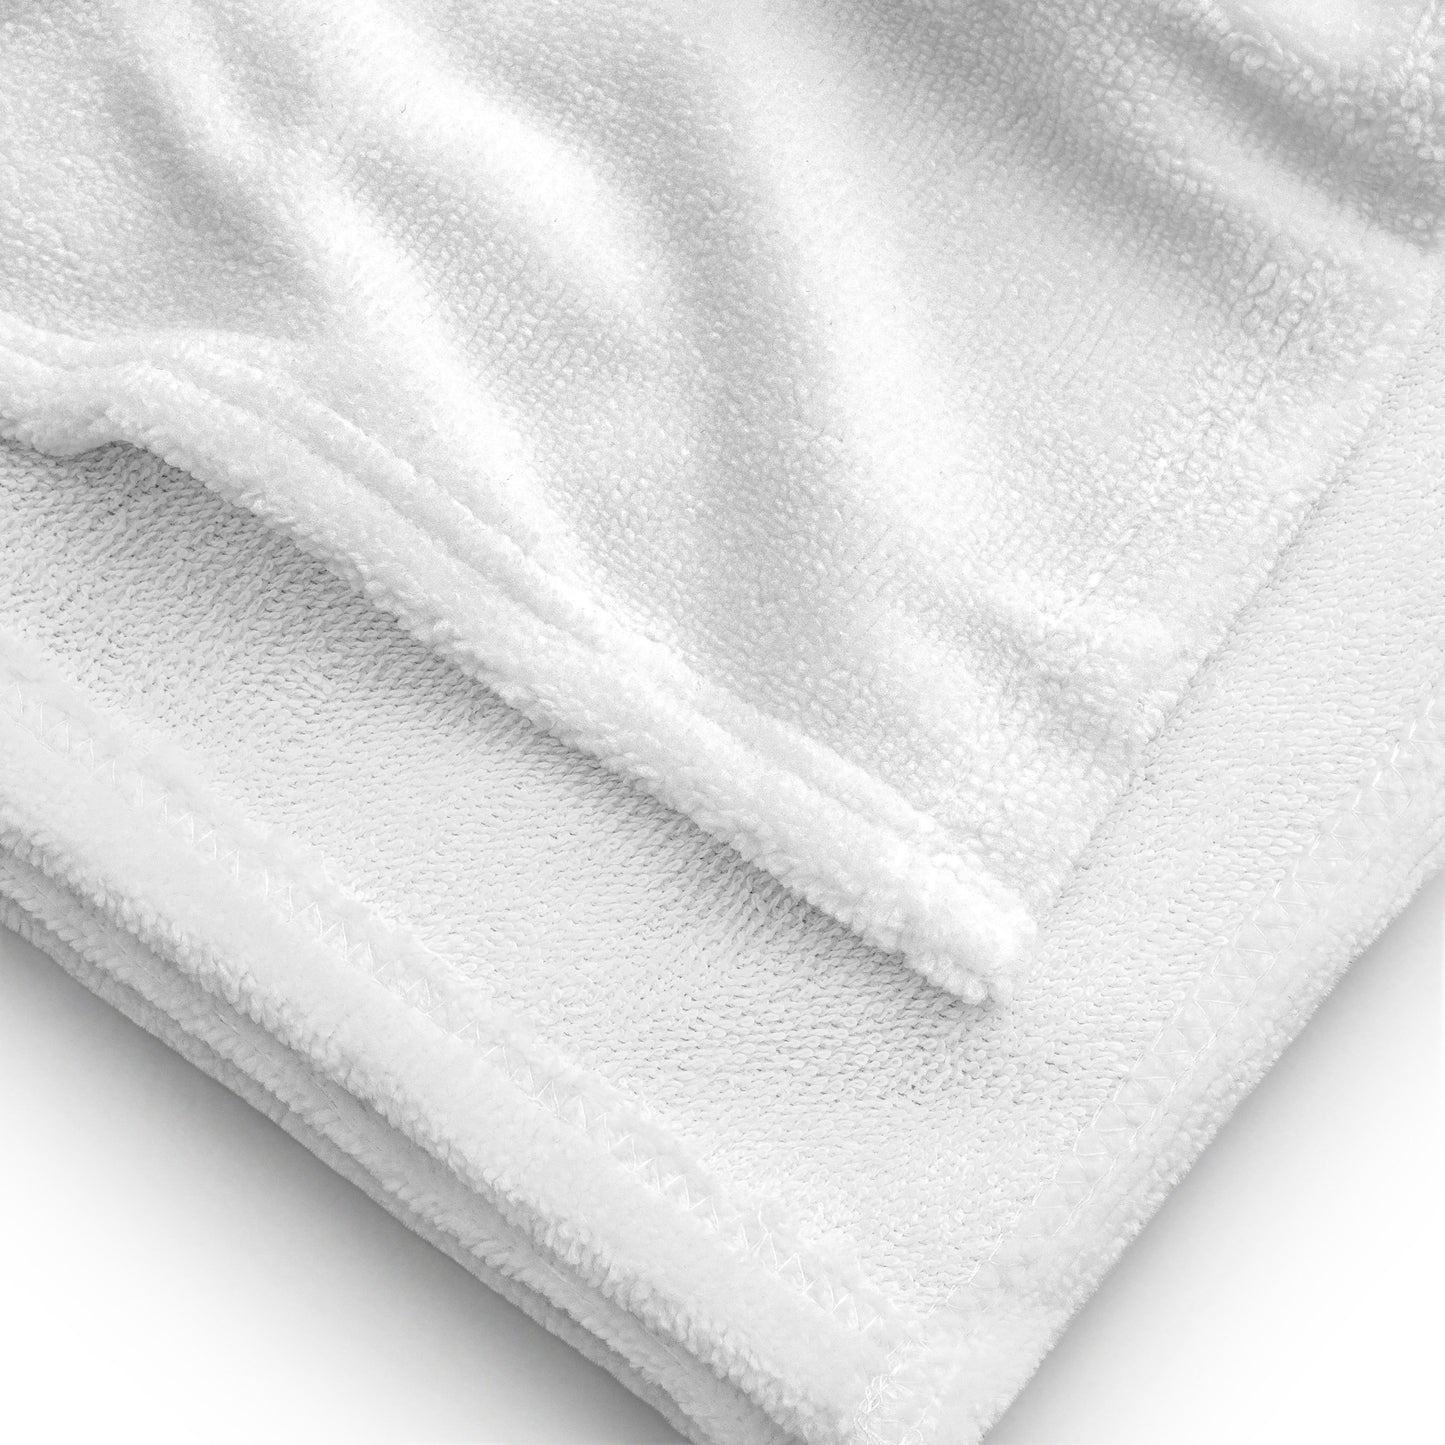 Fans super soft Towel - ONLY BOATS